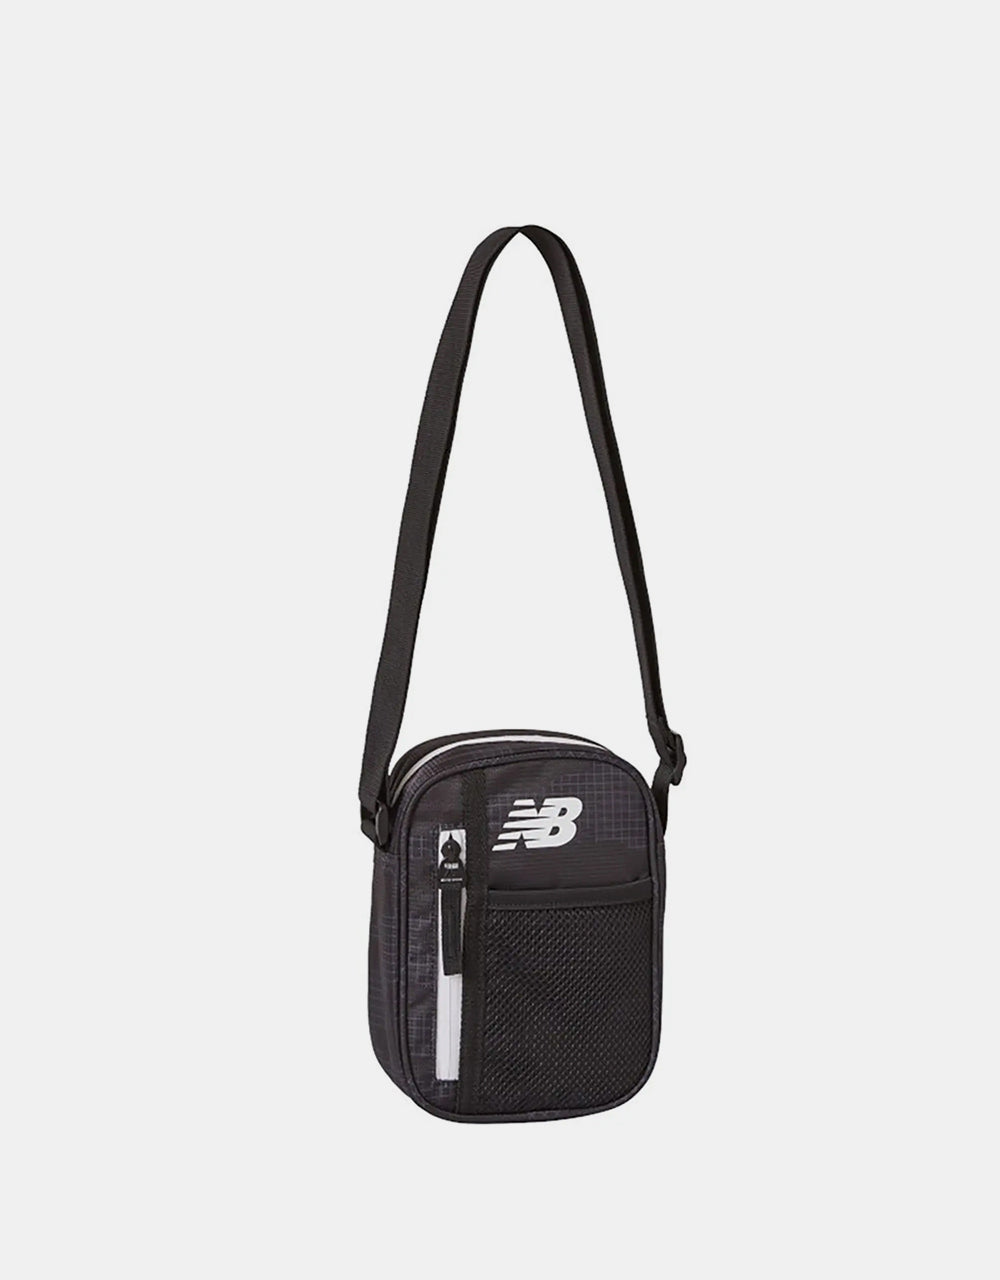 New Balance OPP Shoulder Bag - Thunder (Grid Camo)